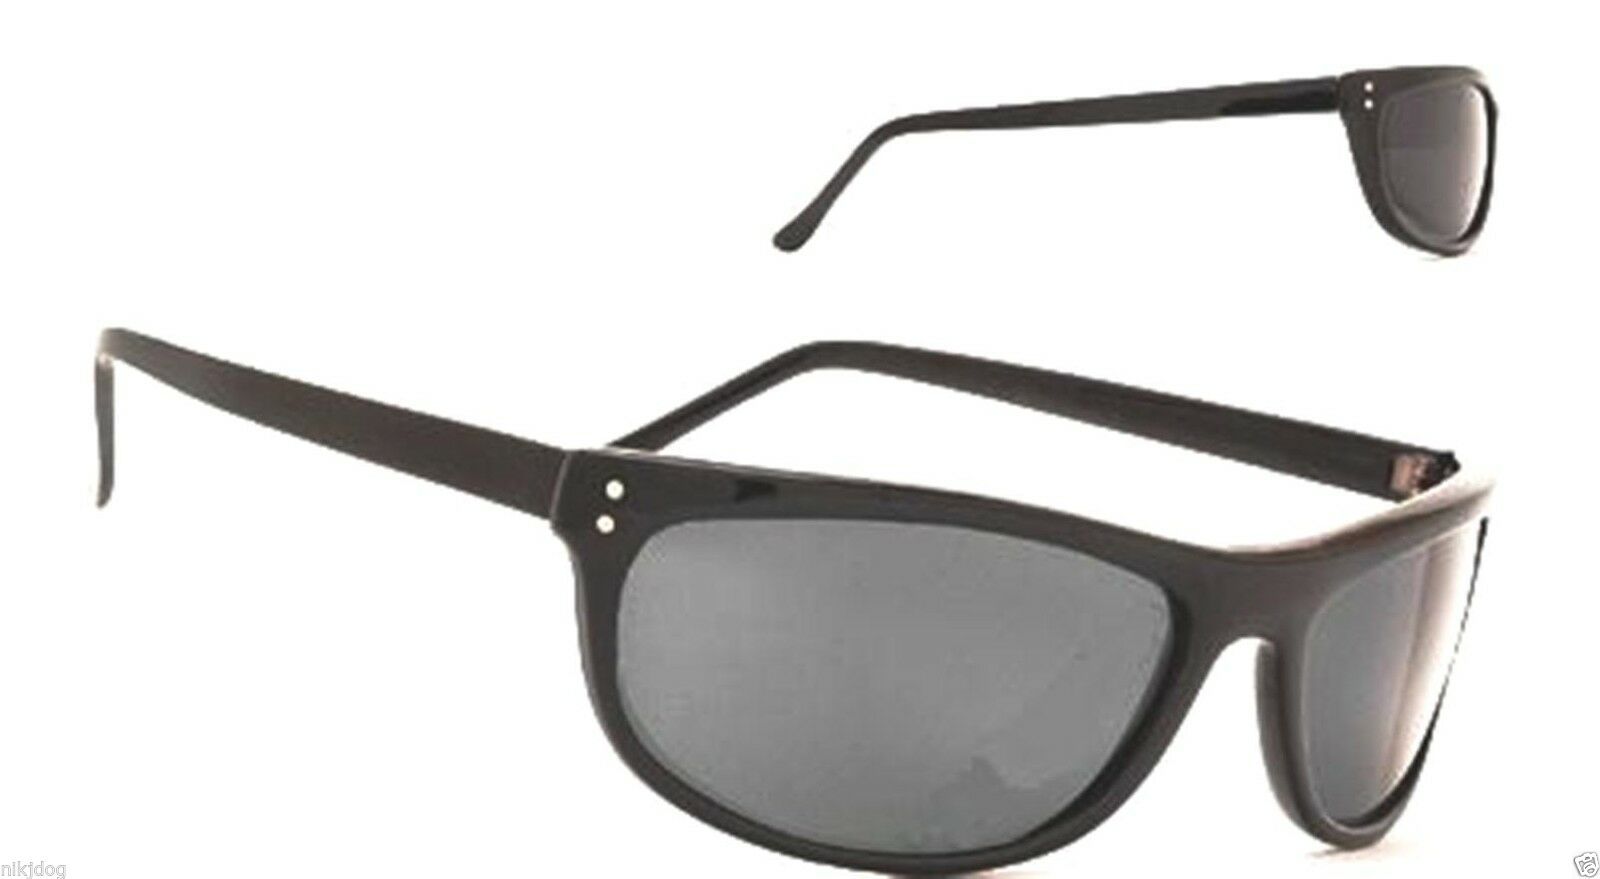 Black Wrap Sunglasses Gray Lenses 100% UV 400 Protection